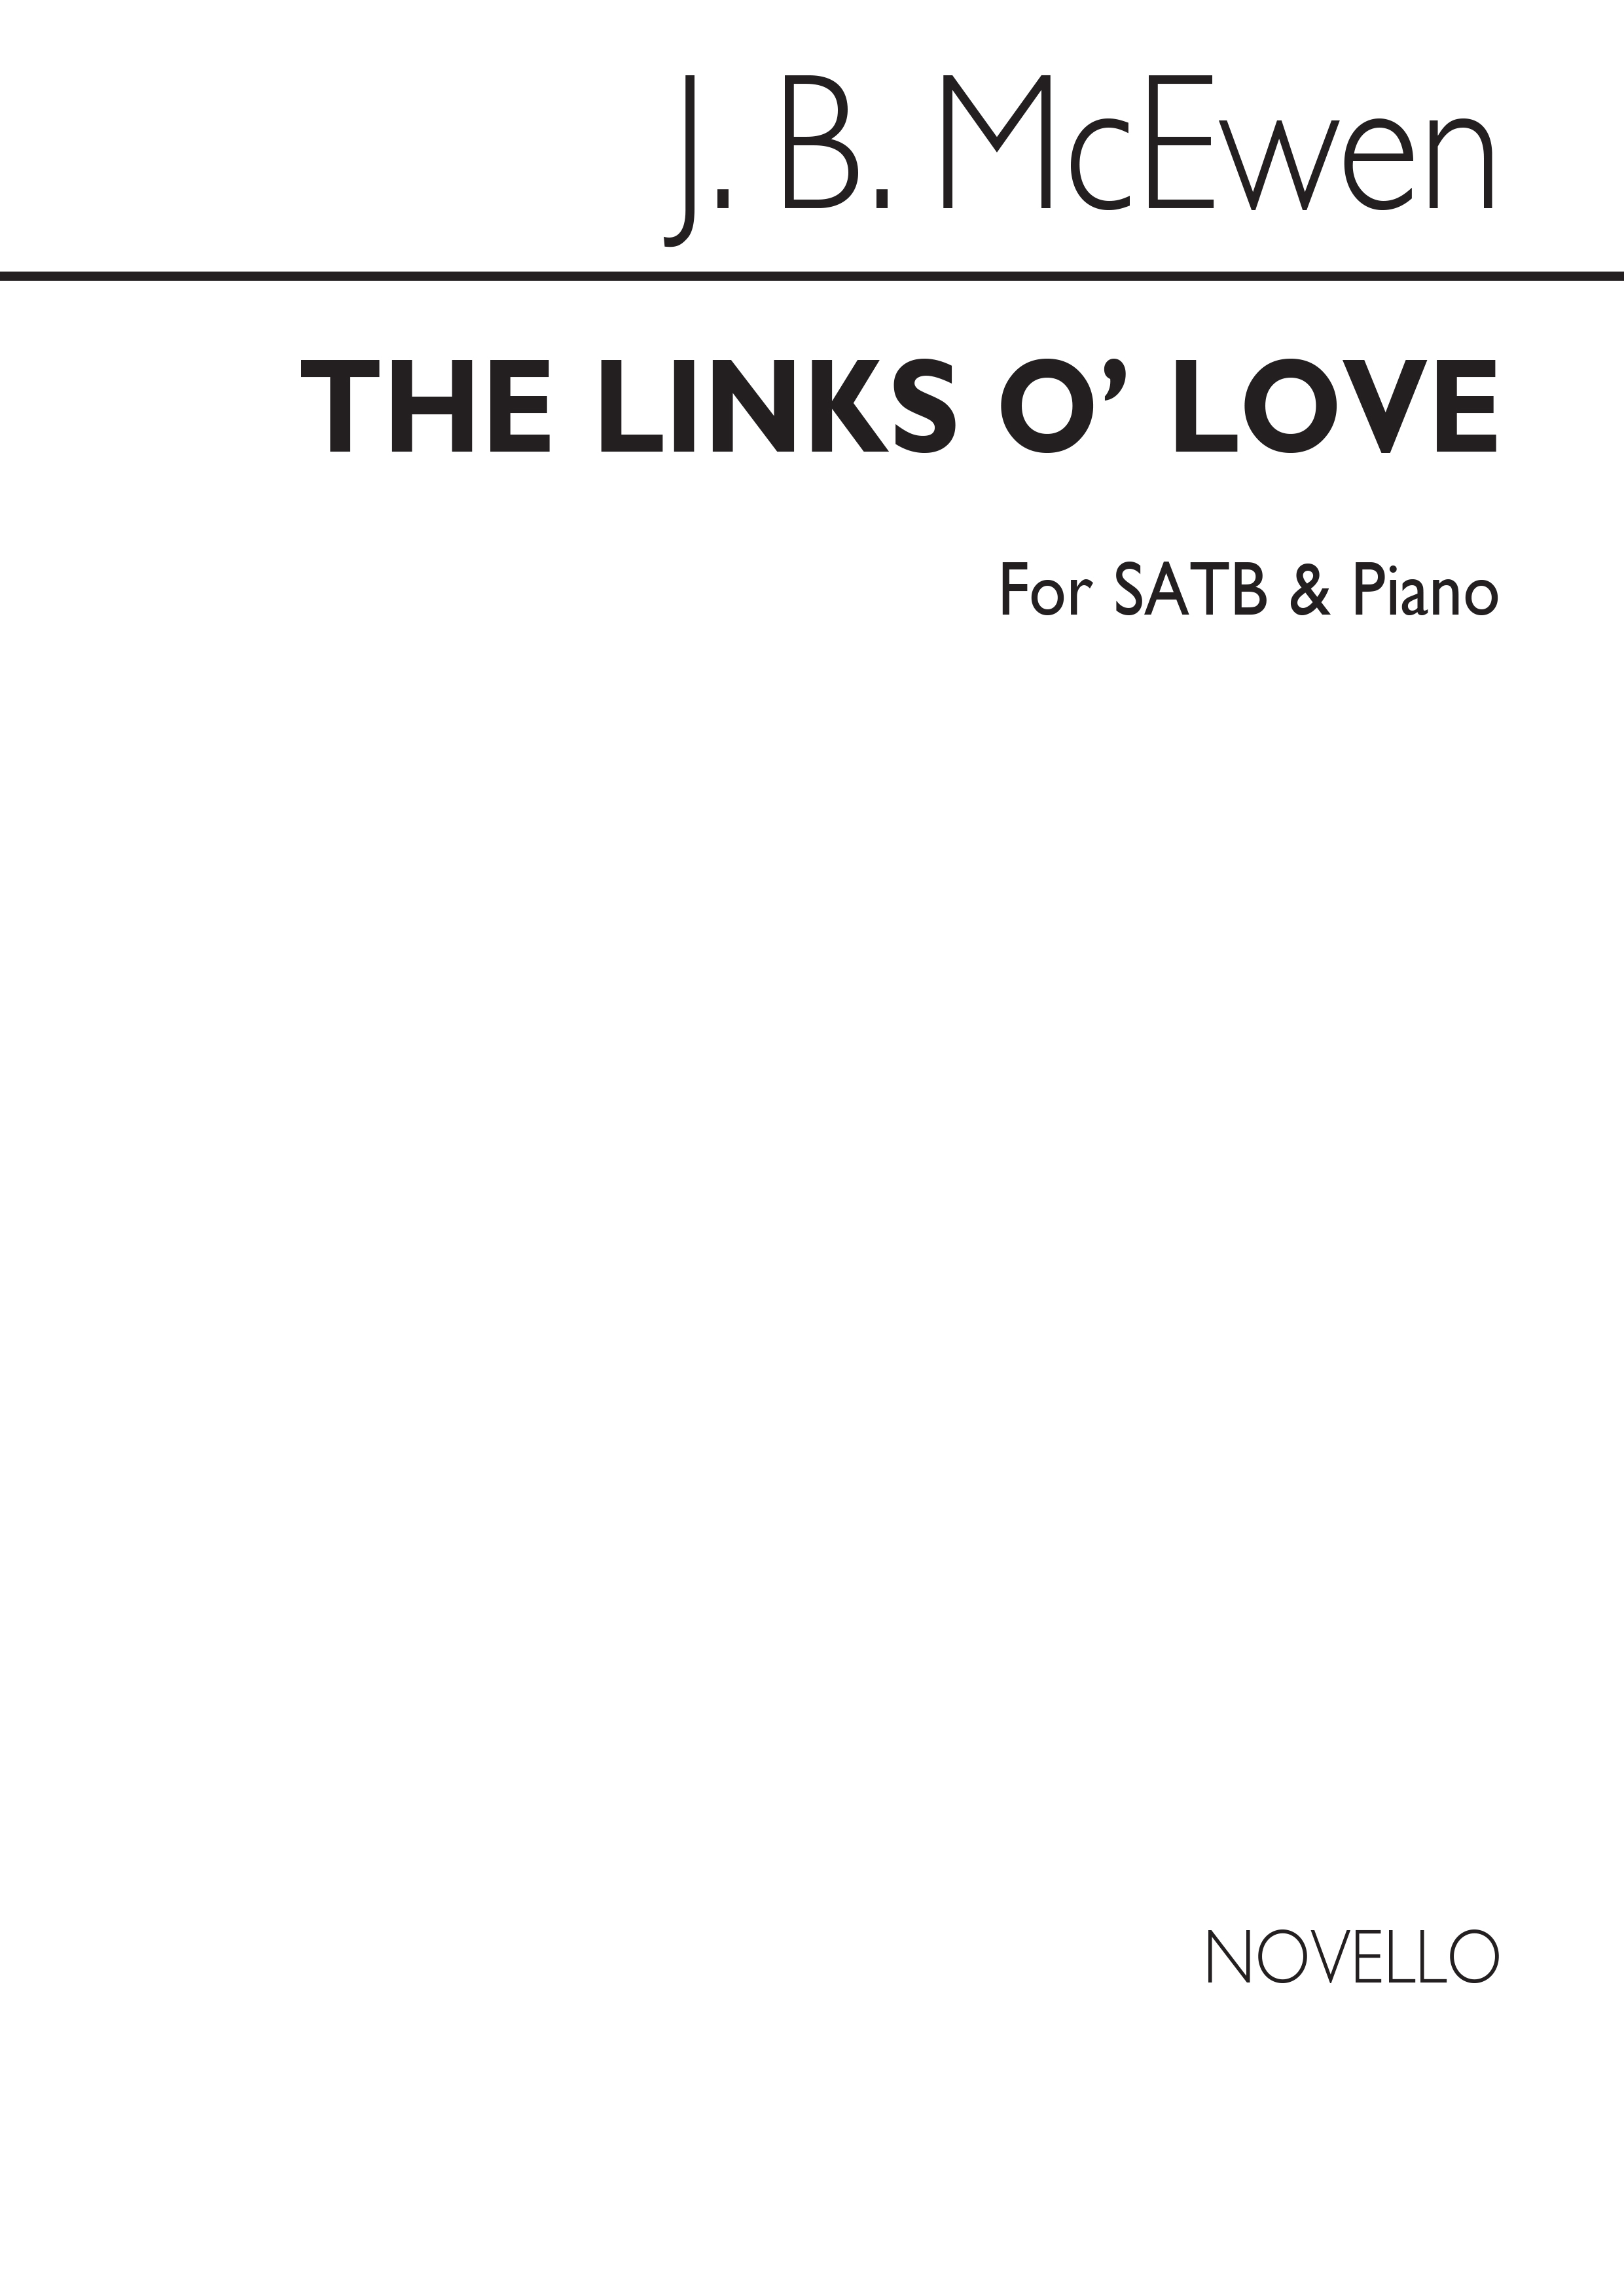 John B. Mcewen: The Links O' Love Satb/Piano